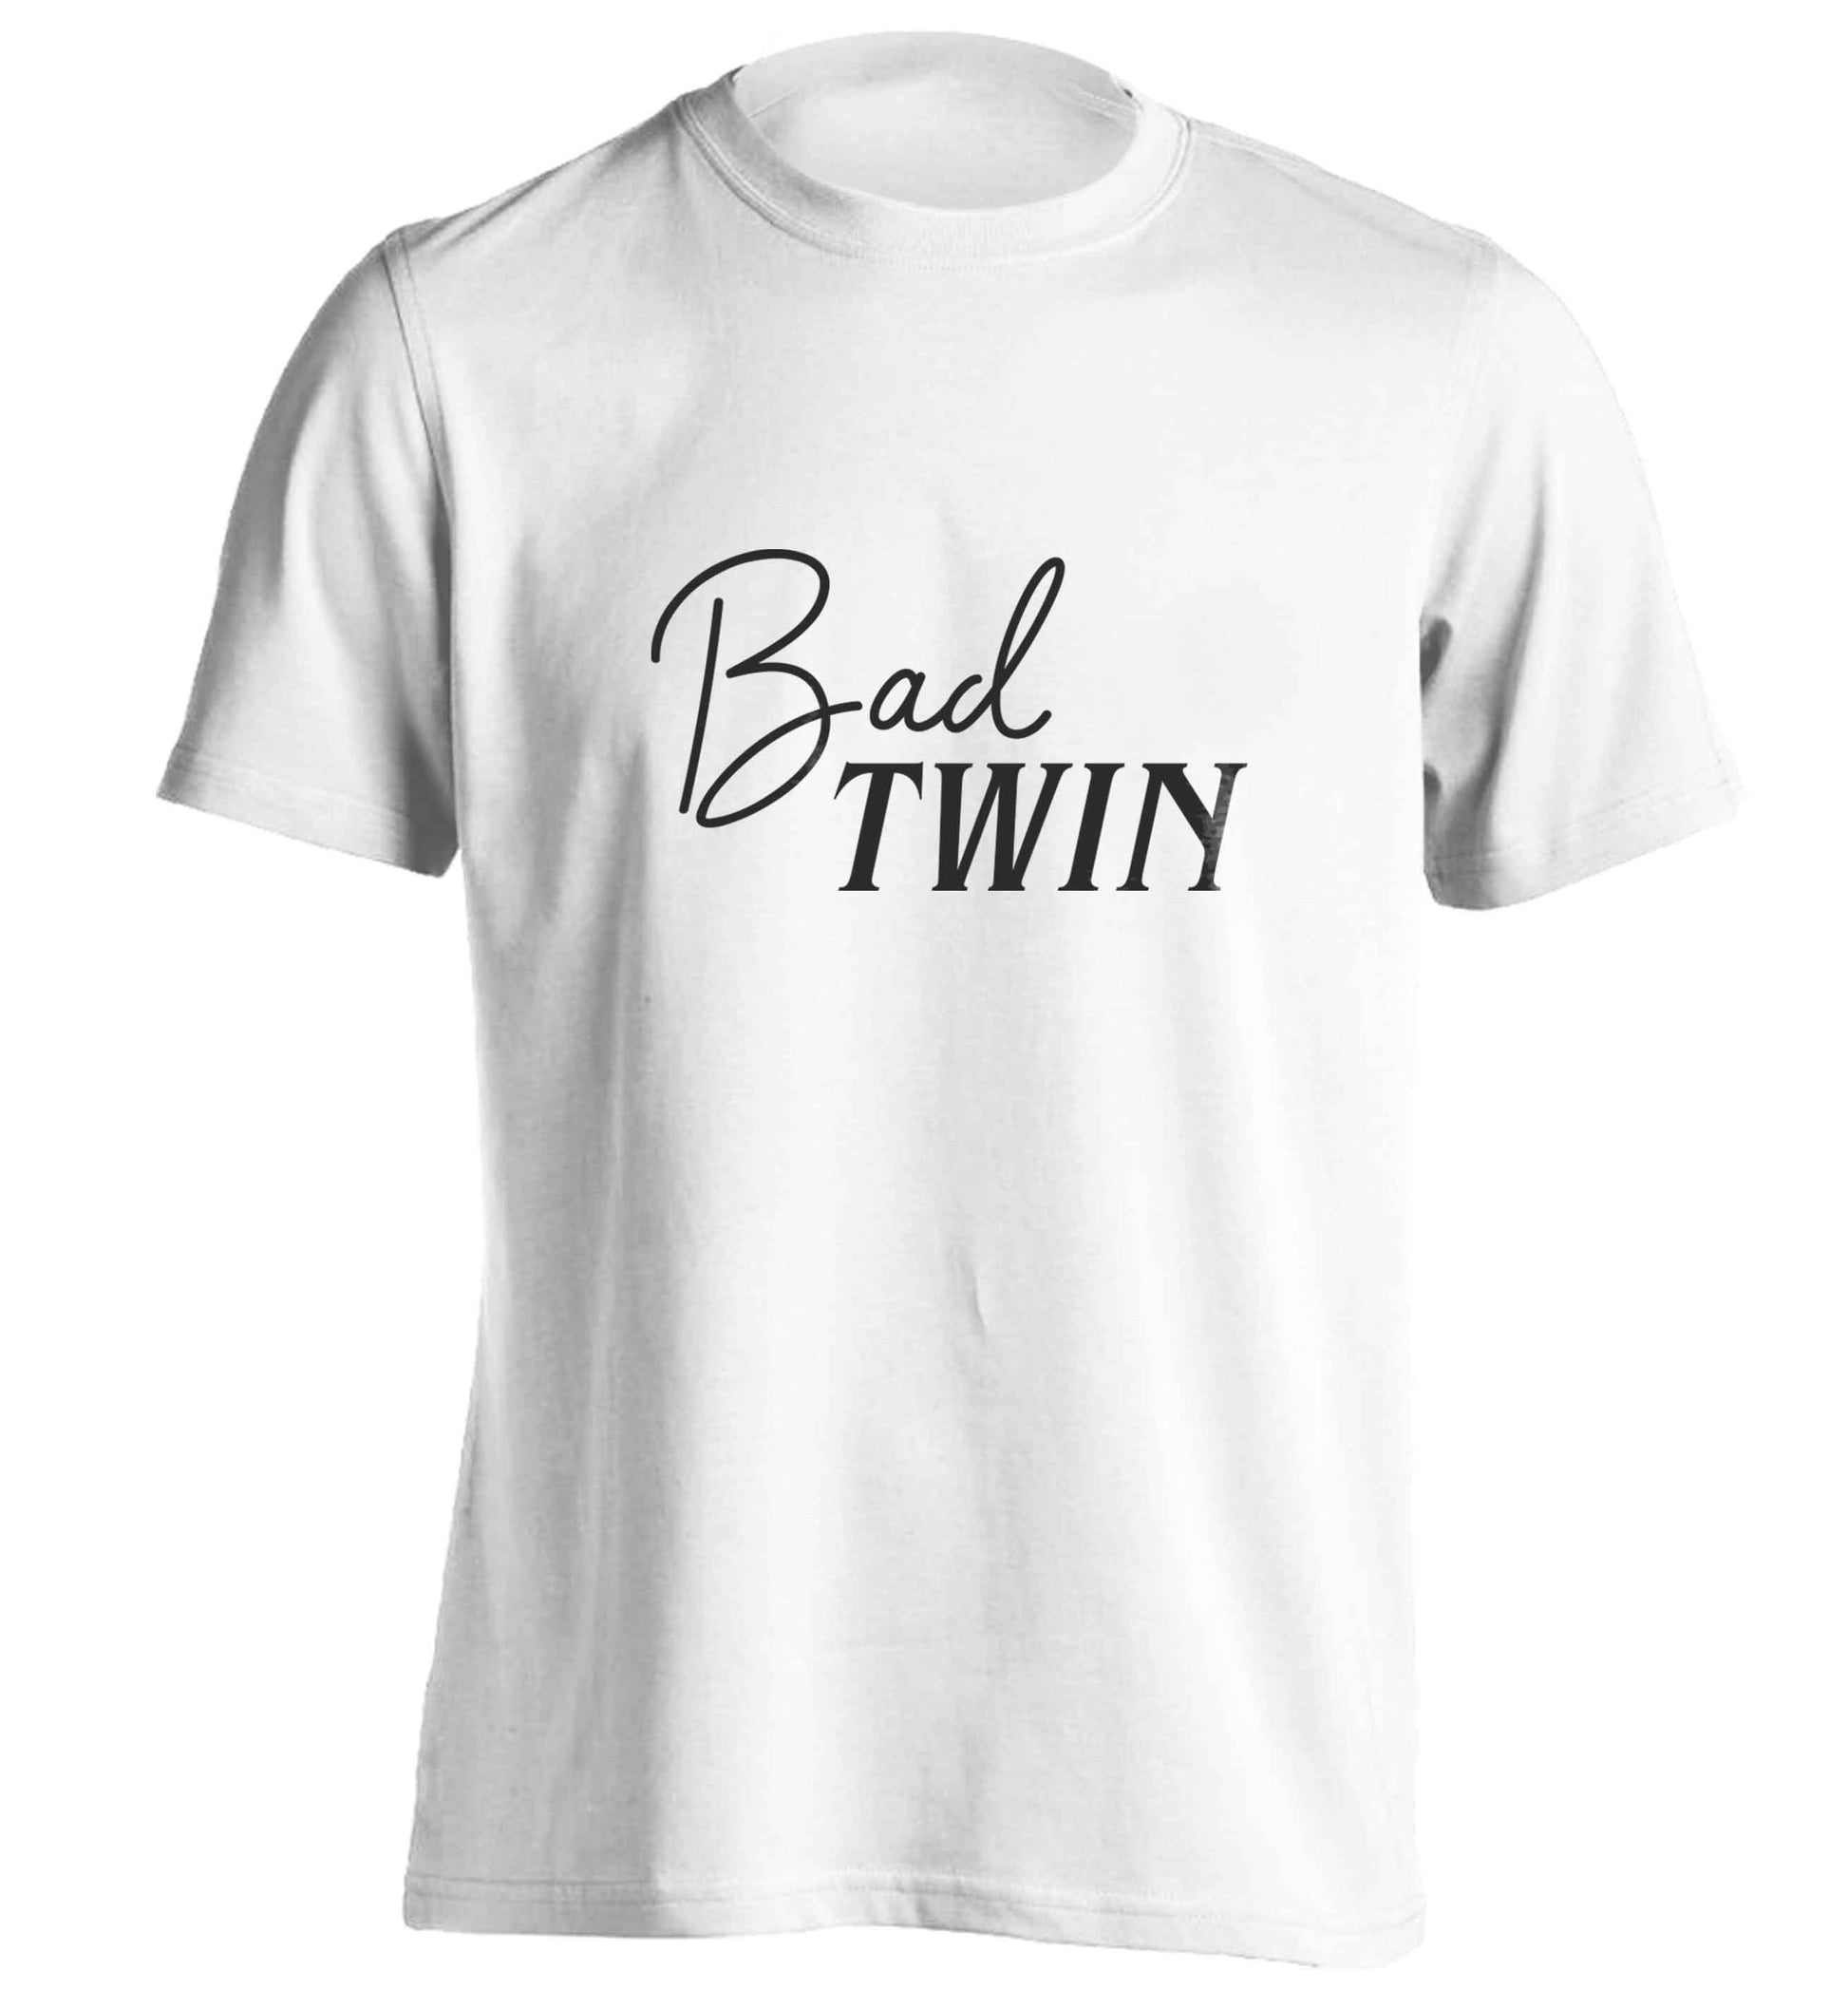 Bad twin adults unisex white Tshirt 2XL